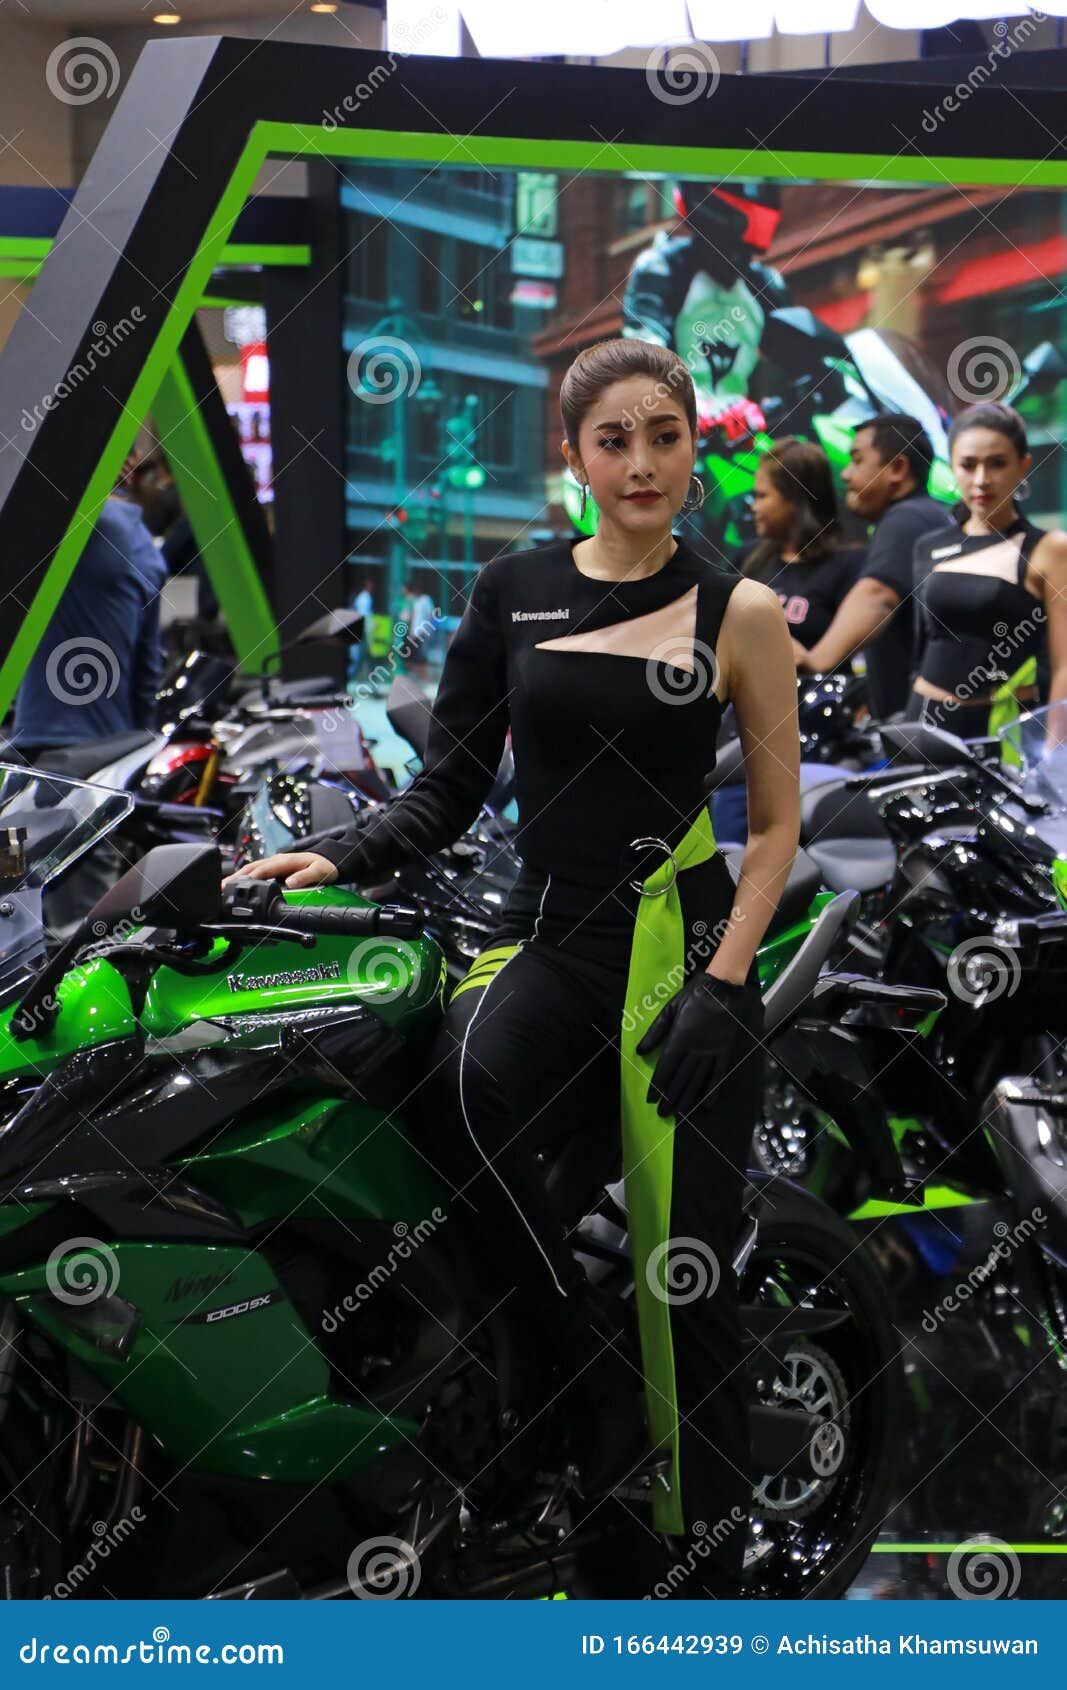 Beautiful Asian Pretty with Kawasaki Motorbike, Popular Marketing for Making Motorcycle Booth Interest at Thailand International Editorial Stock Image - Image of kawasaki: 166442939